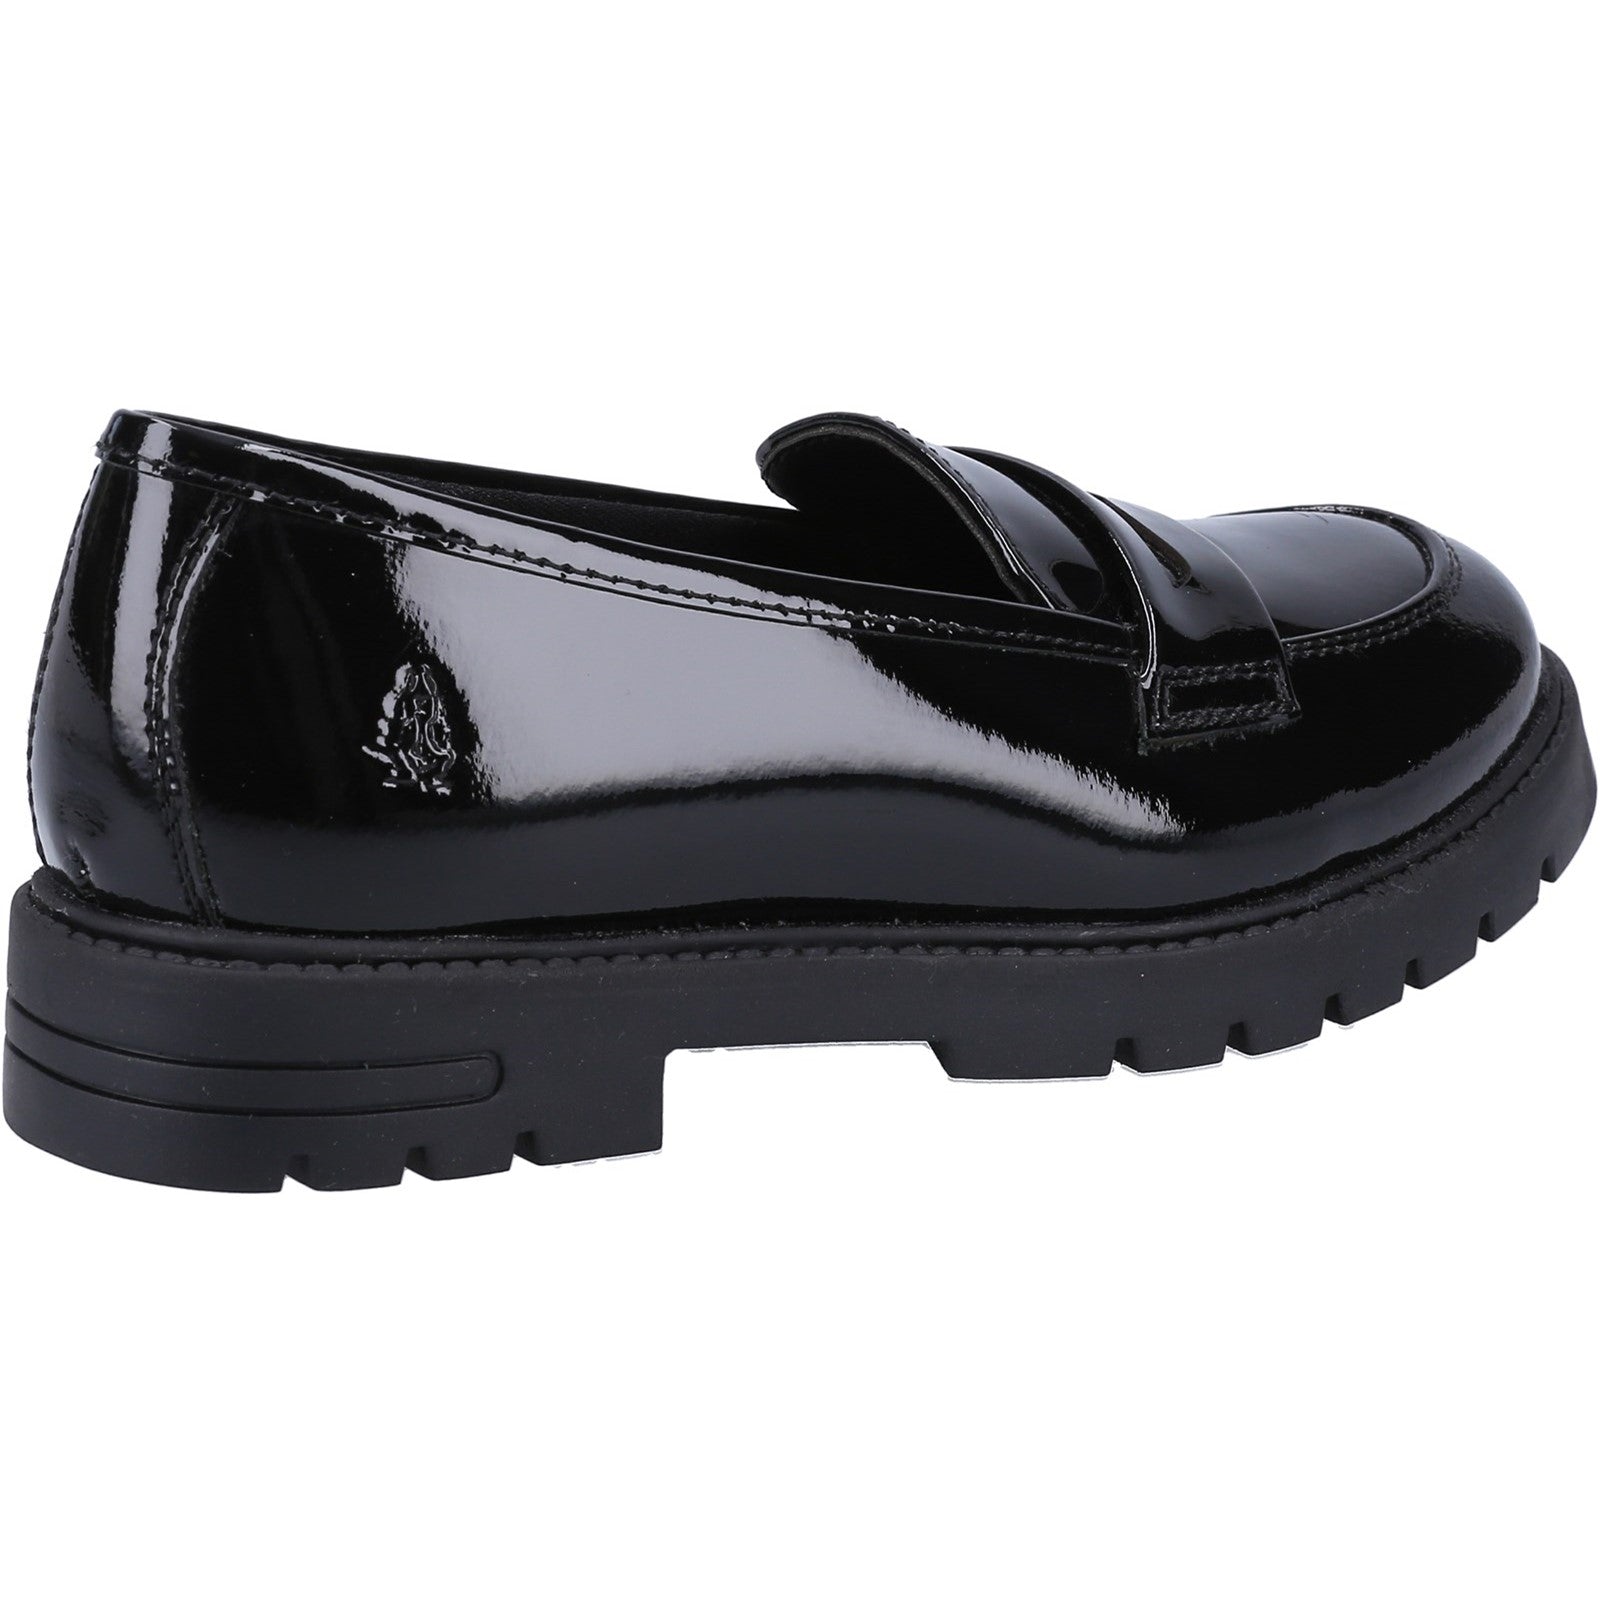 Hush Puppies Girls Hazel Patent Leather School Shoes - Black